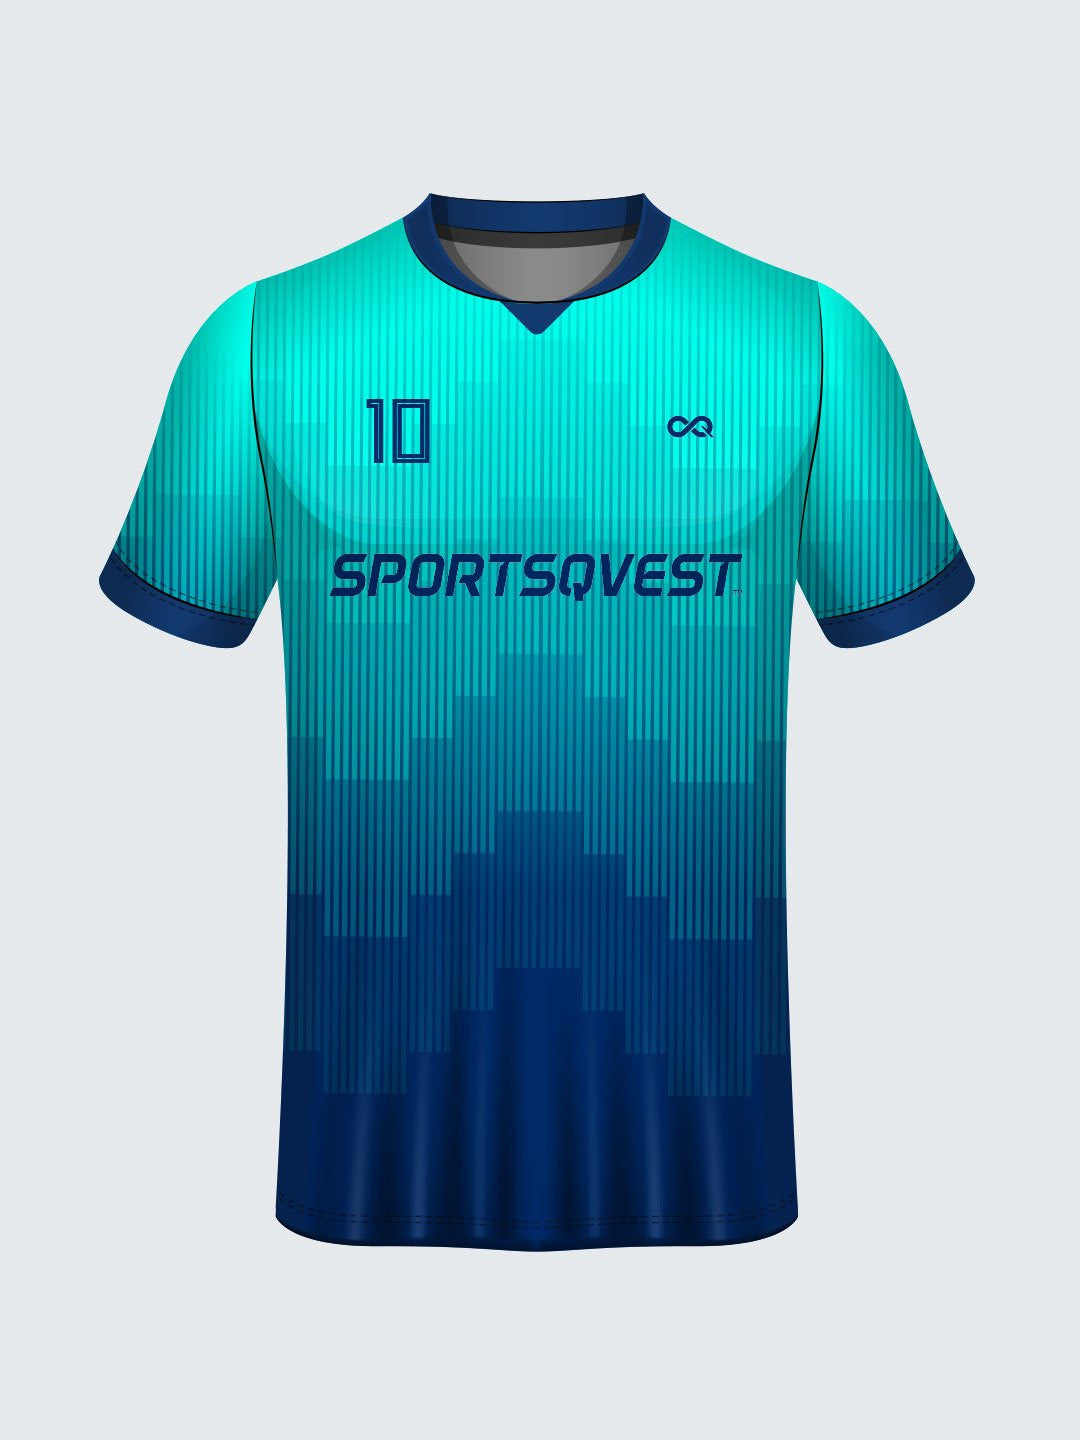 cricket jersey design blue